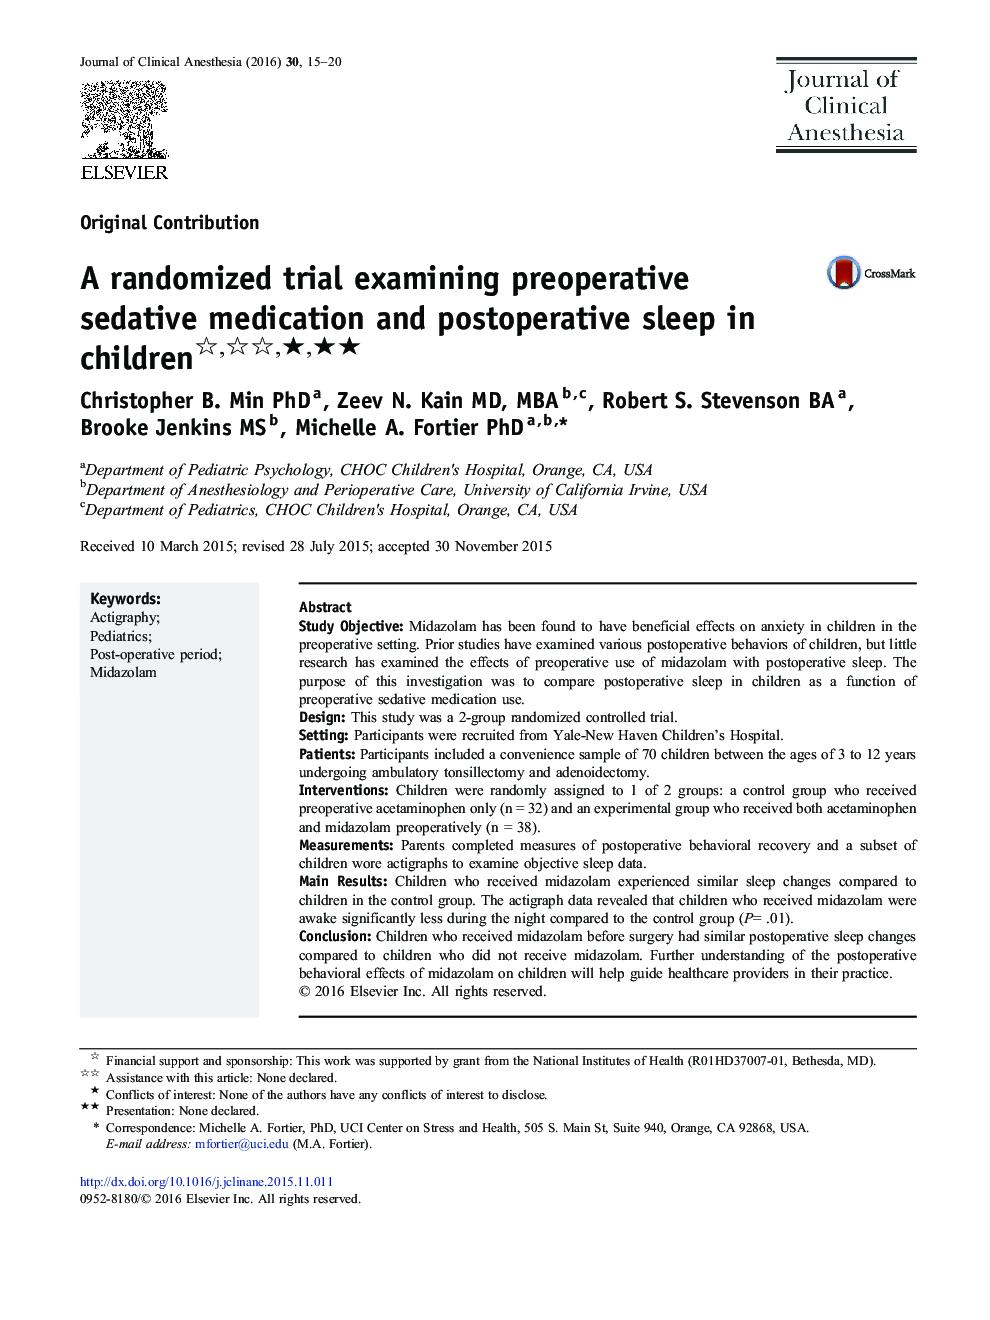 A randomized trial examining preoperative sedative medication and postoperative sleep in children